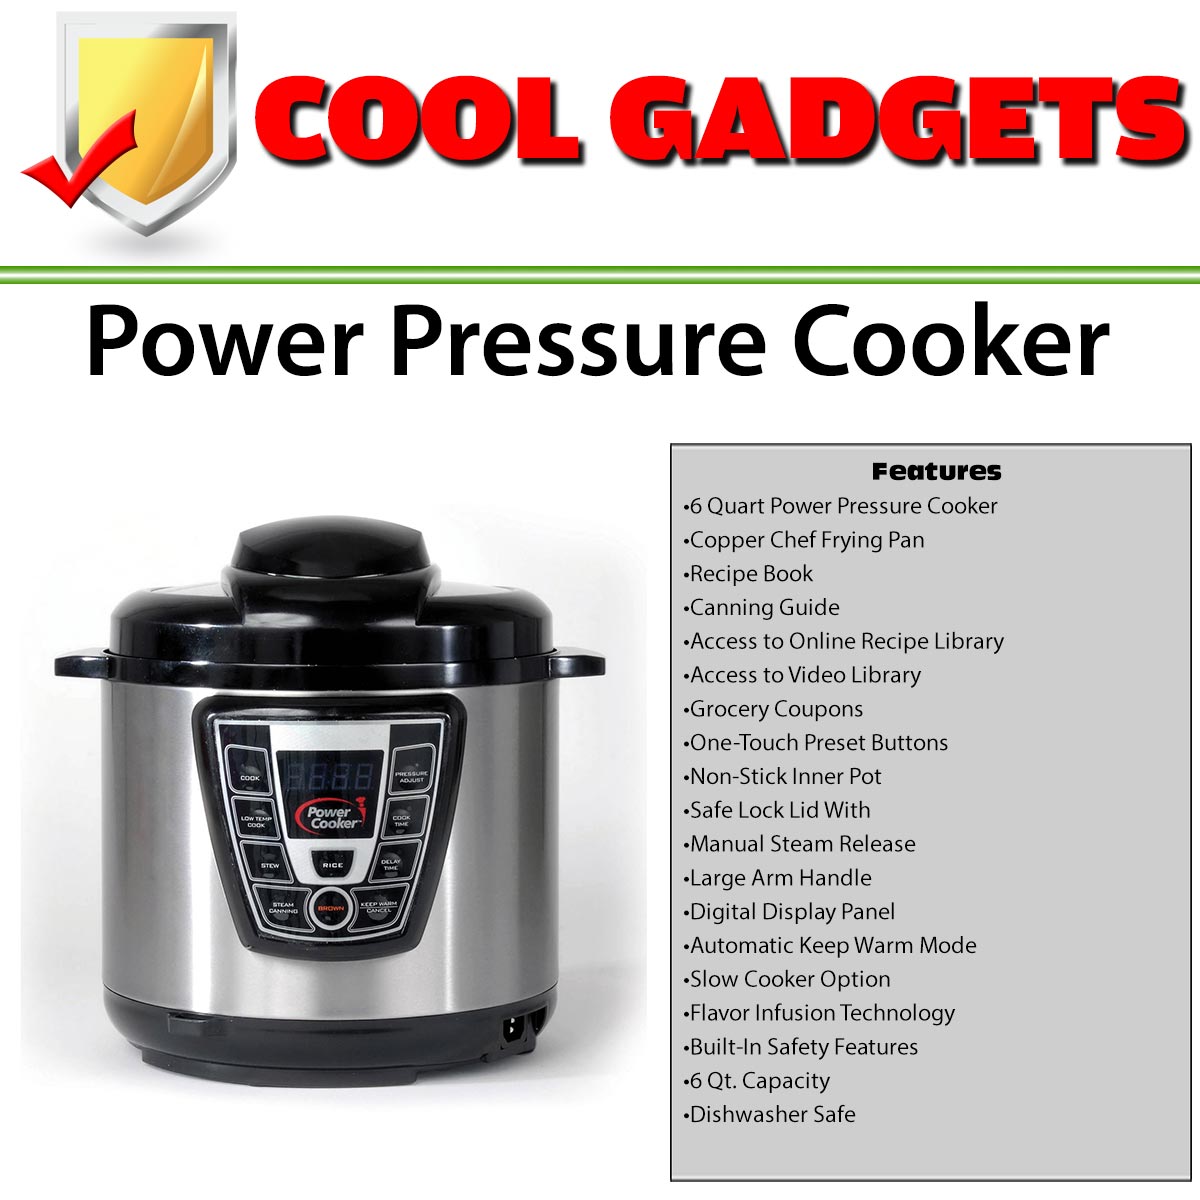 ___Cool-Gadgets-power-pressure-cooker_Rev-1